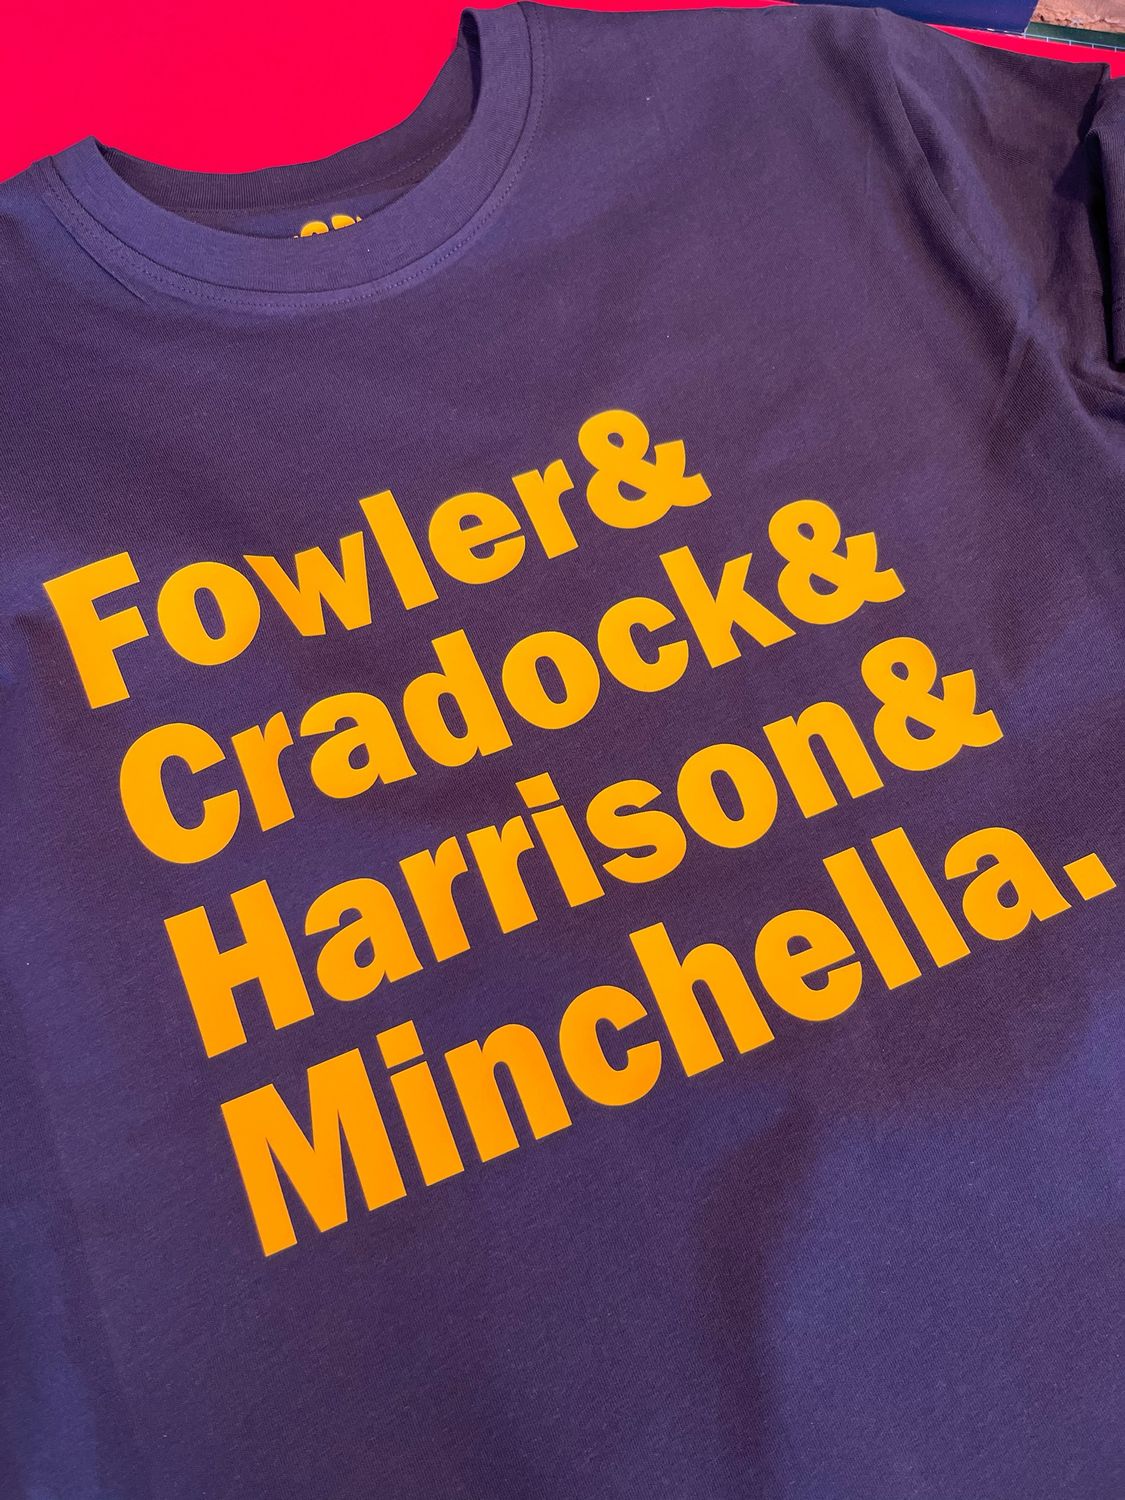 Fowler&Cradock&Harrison&Minchella organic cotton t shirt